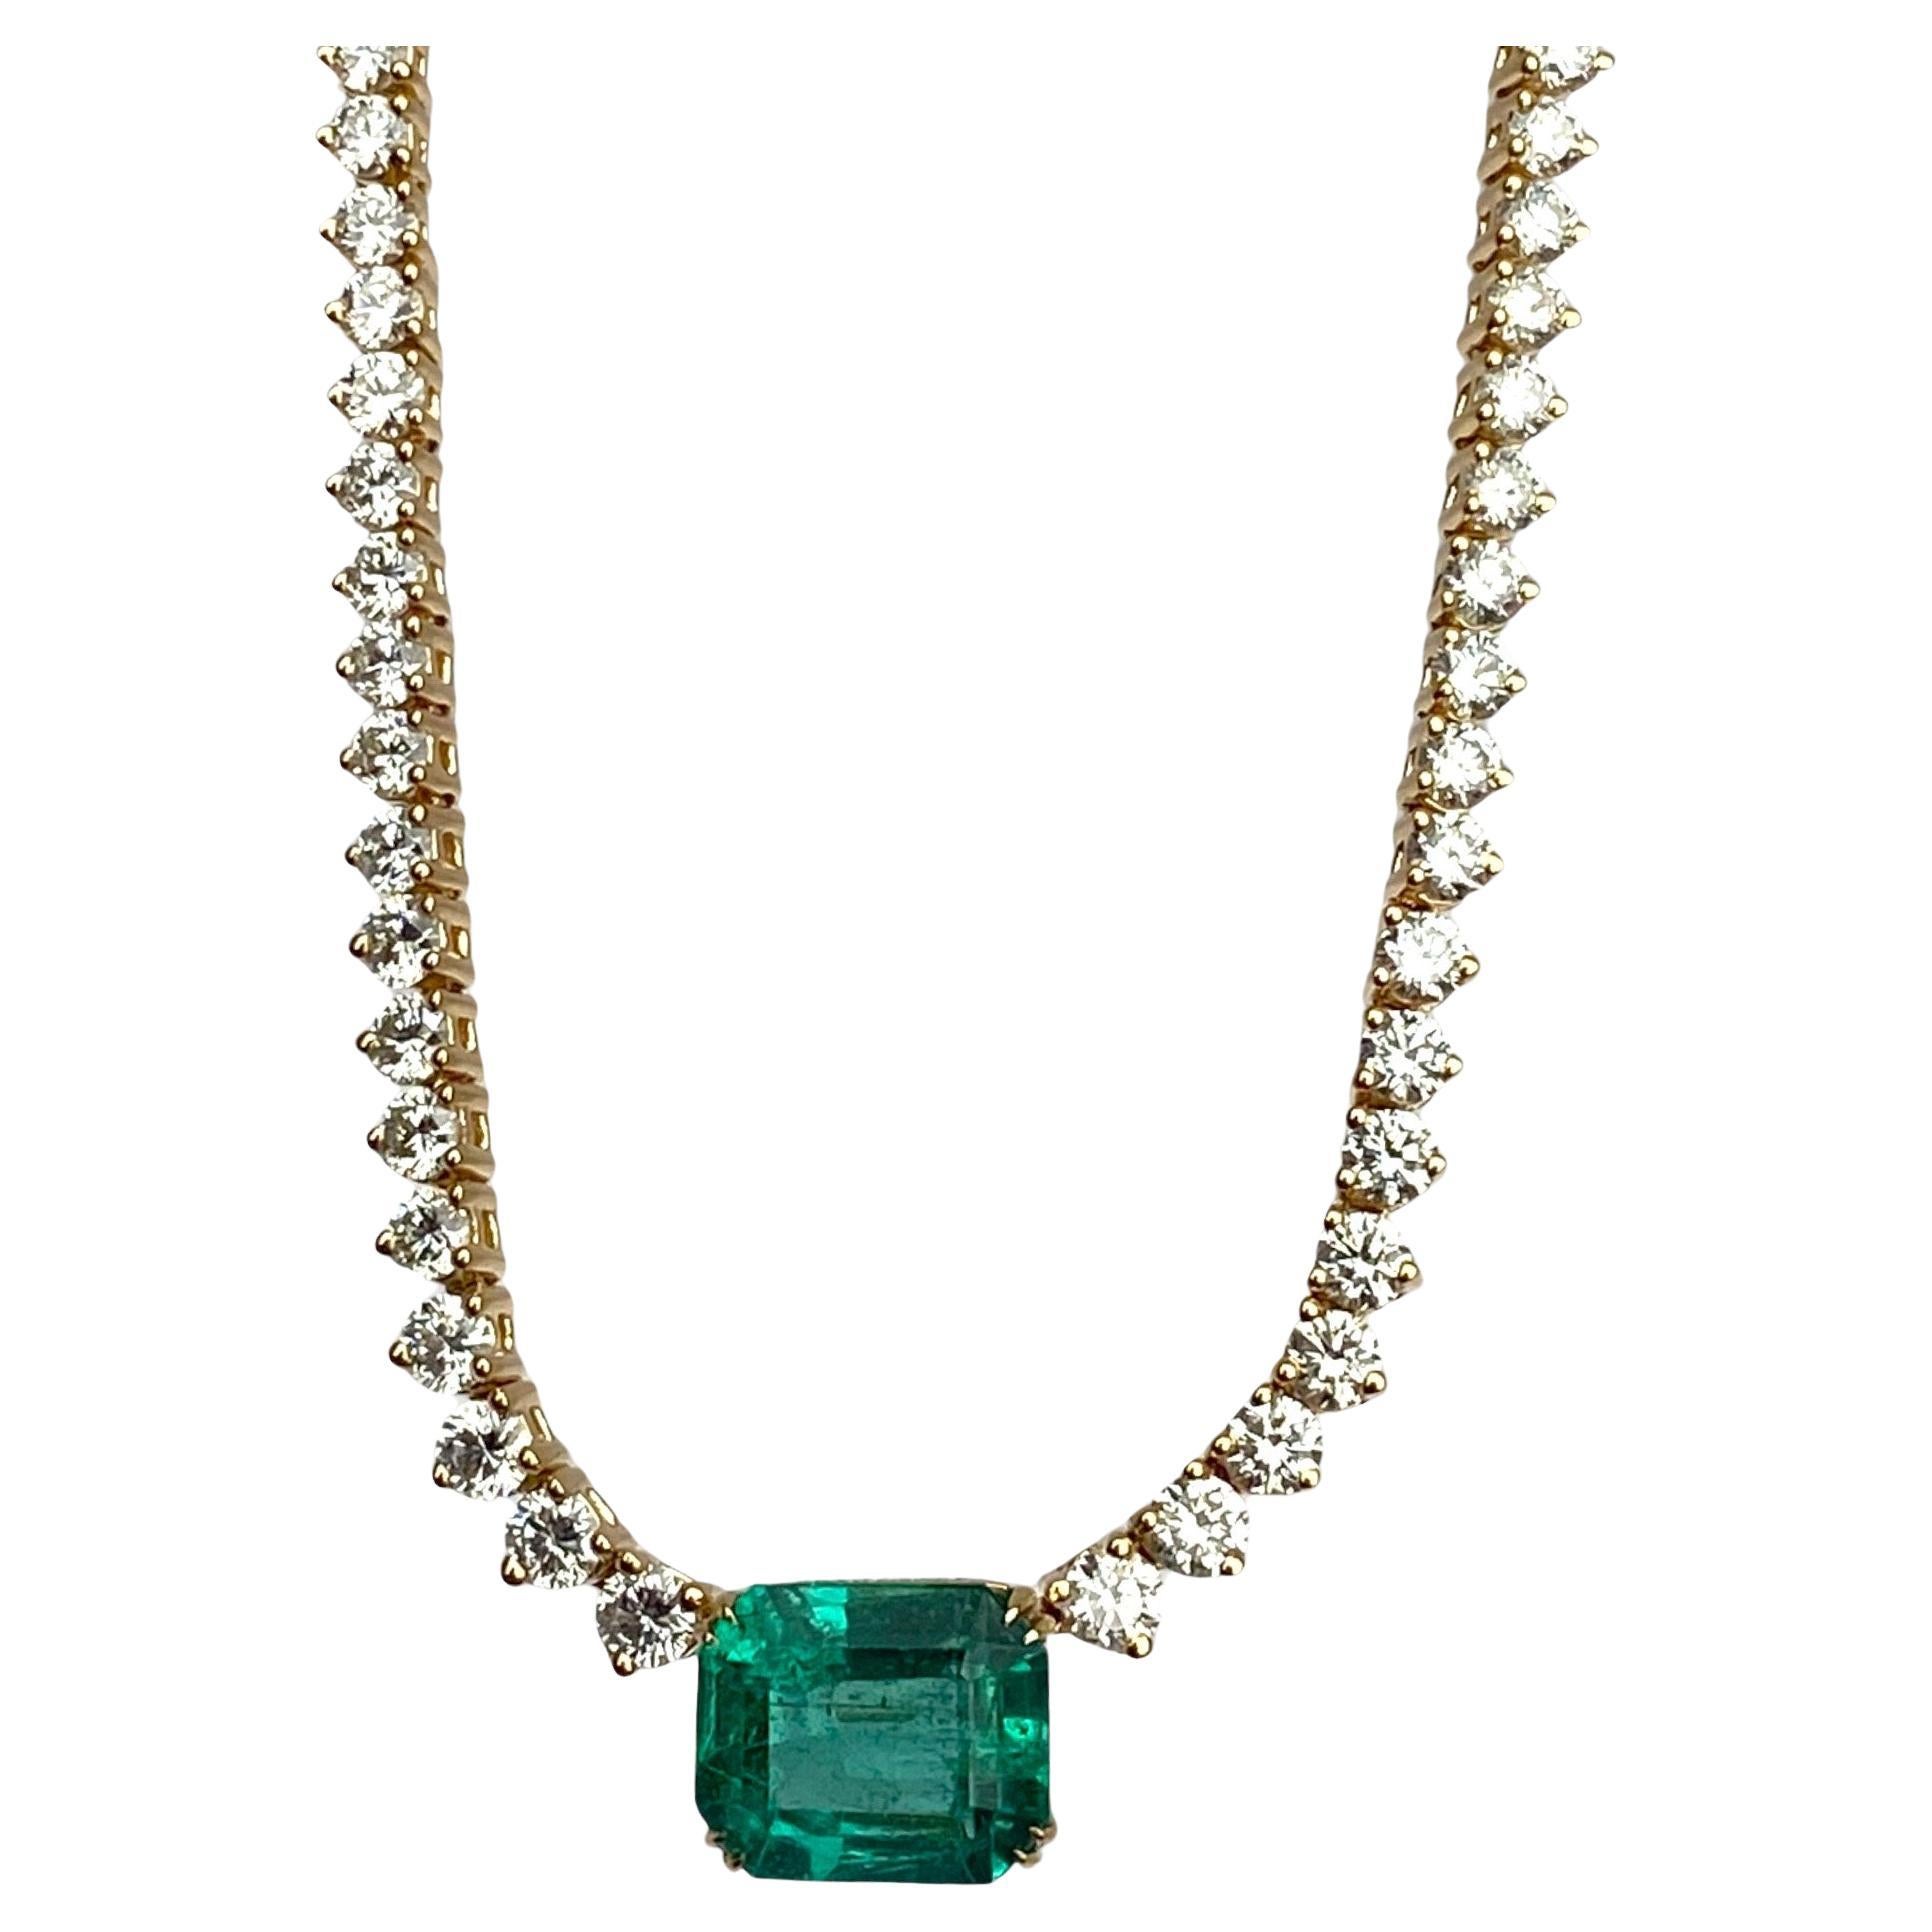 Statement 4 ct Emerald Cut Emerald and Graduated Diamond Necklace